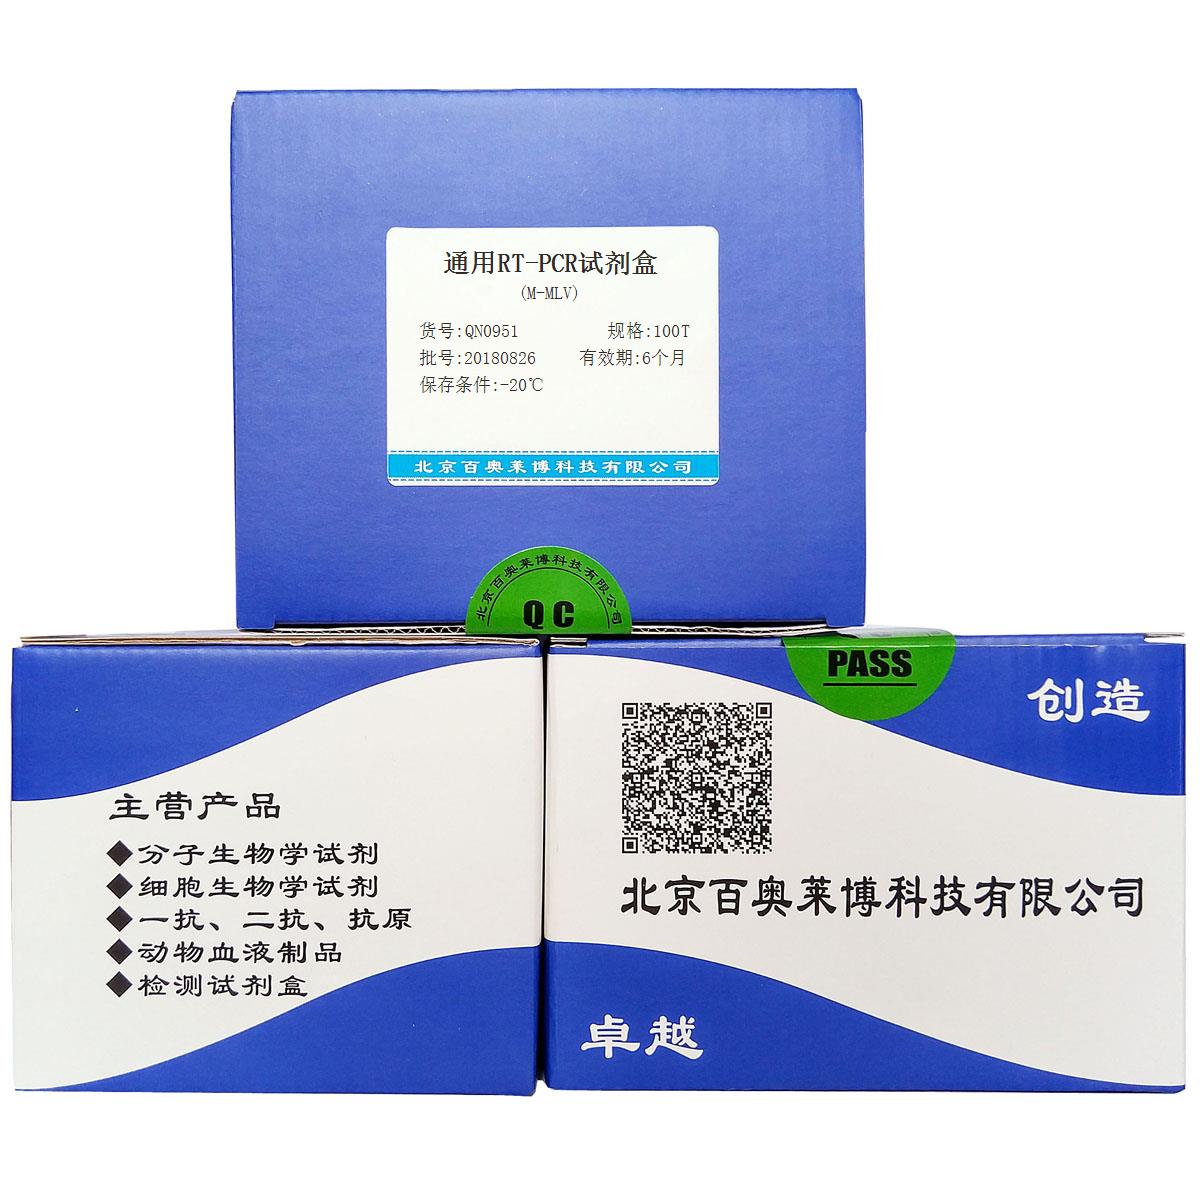 通用RT-PCR试剂盒(M-MLV)